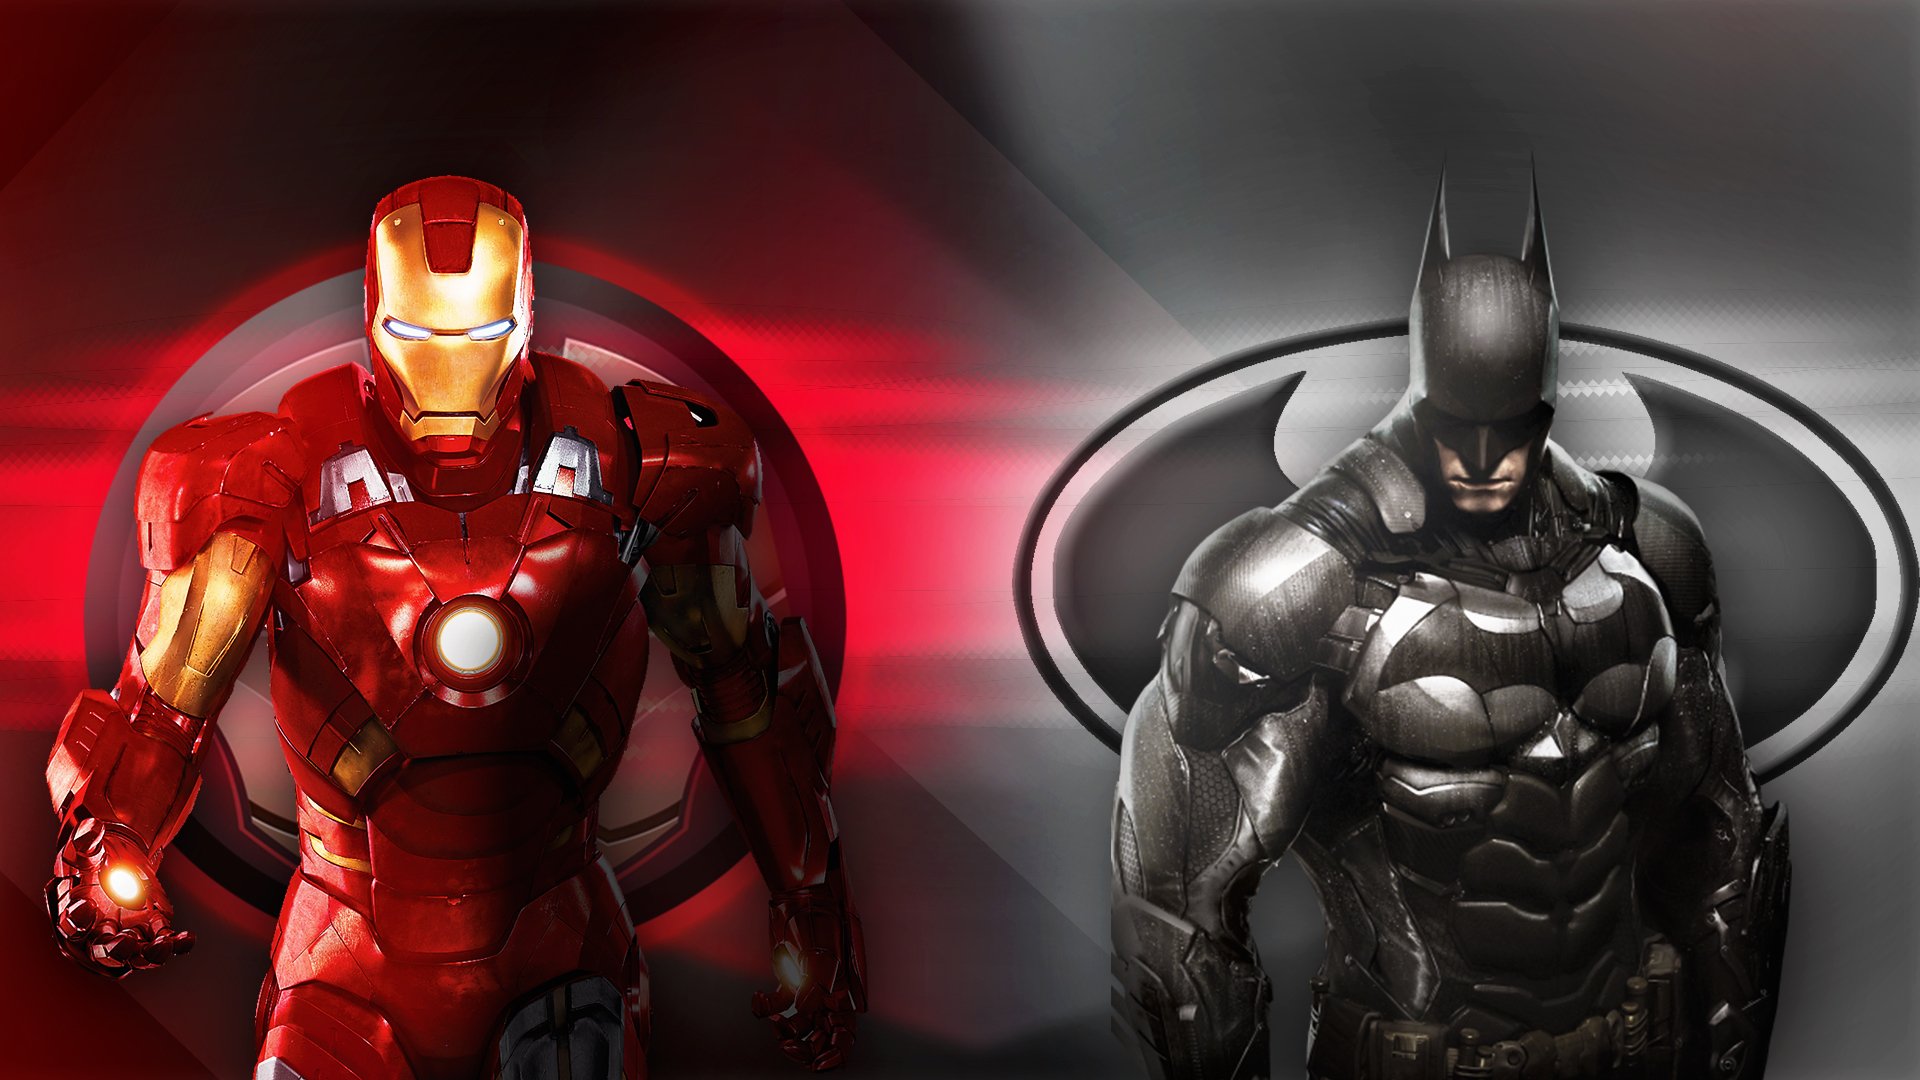 Iron man batman by altedits